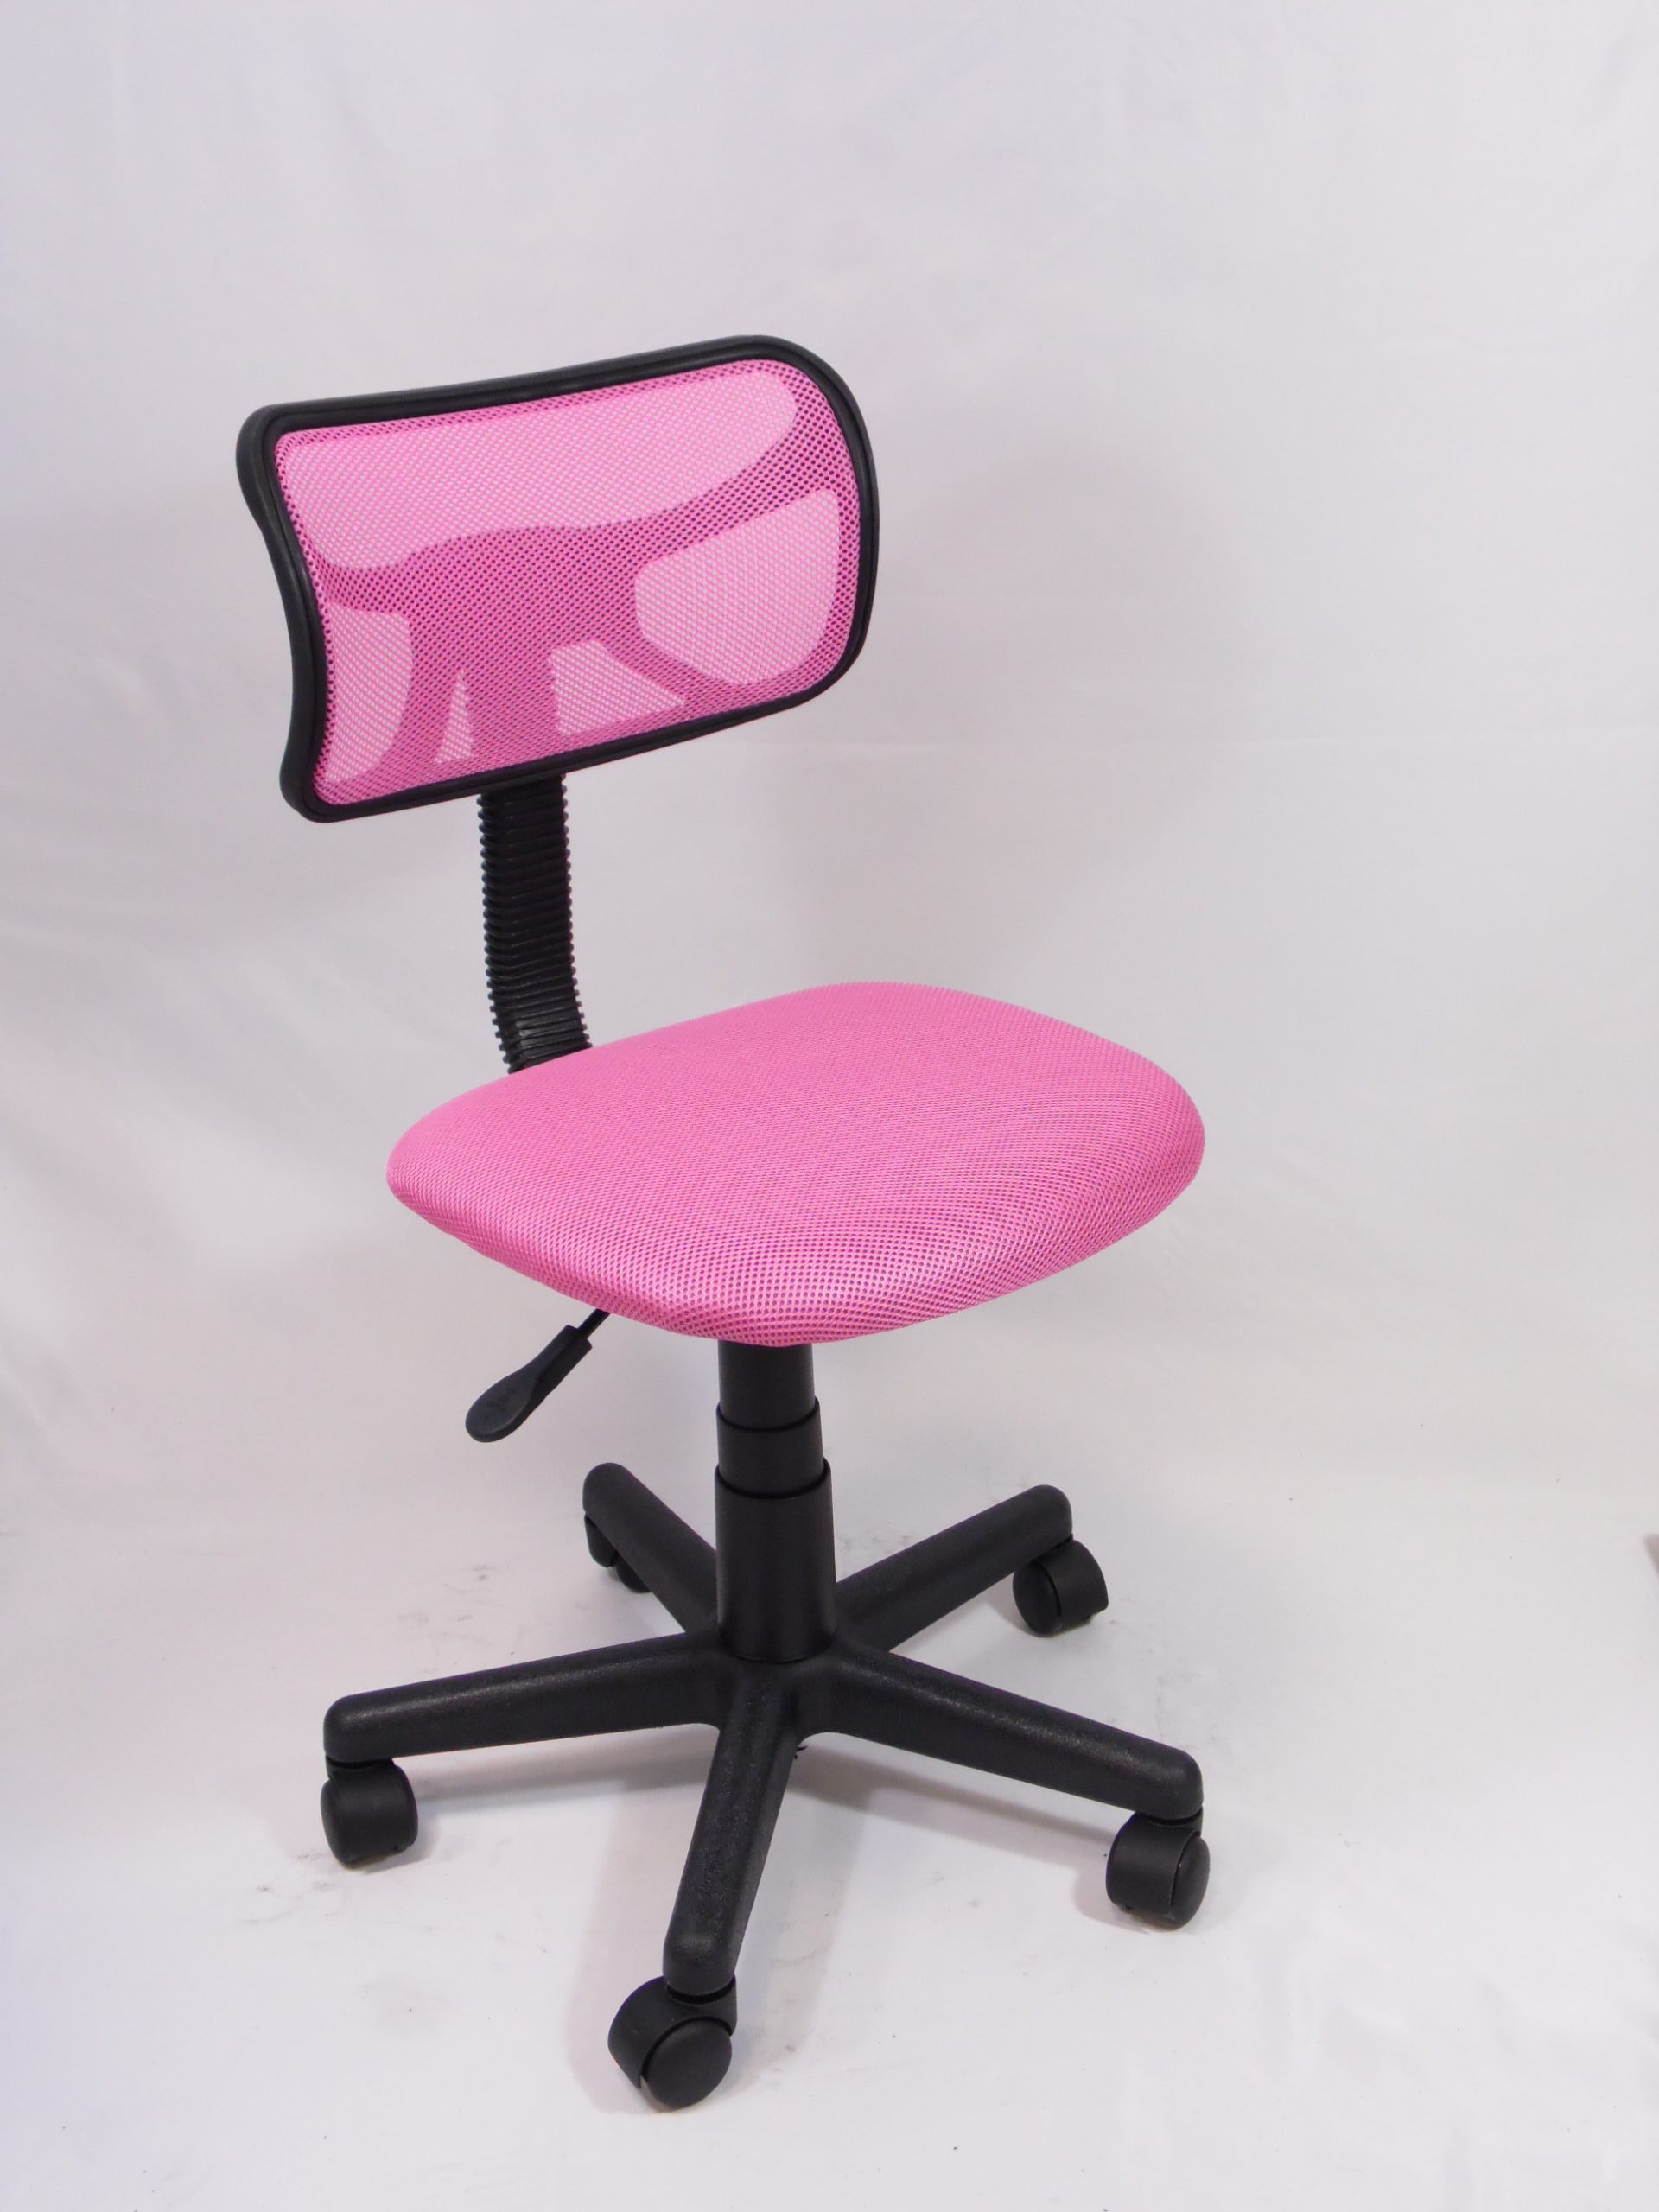 sedie per pc dimensioni: h max 83cm x d 55cm, h sedile 45cm x d sedile 44cm; Materiale: plastica e tessuto color rosa